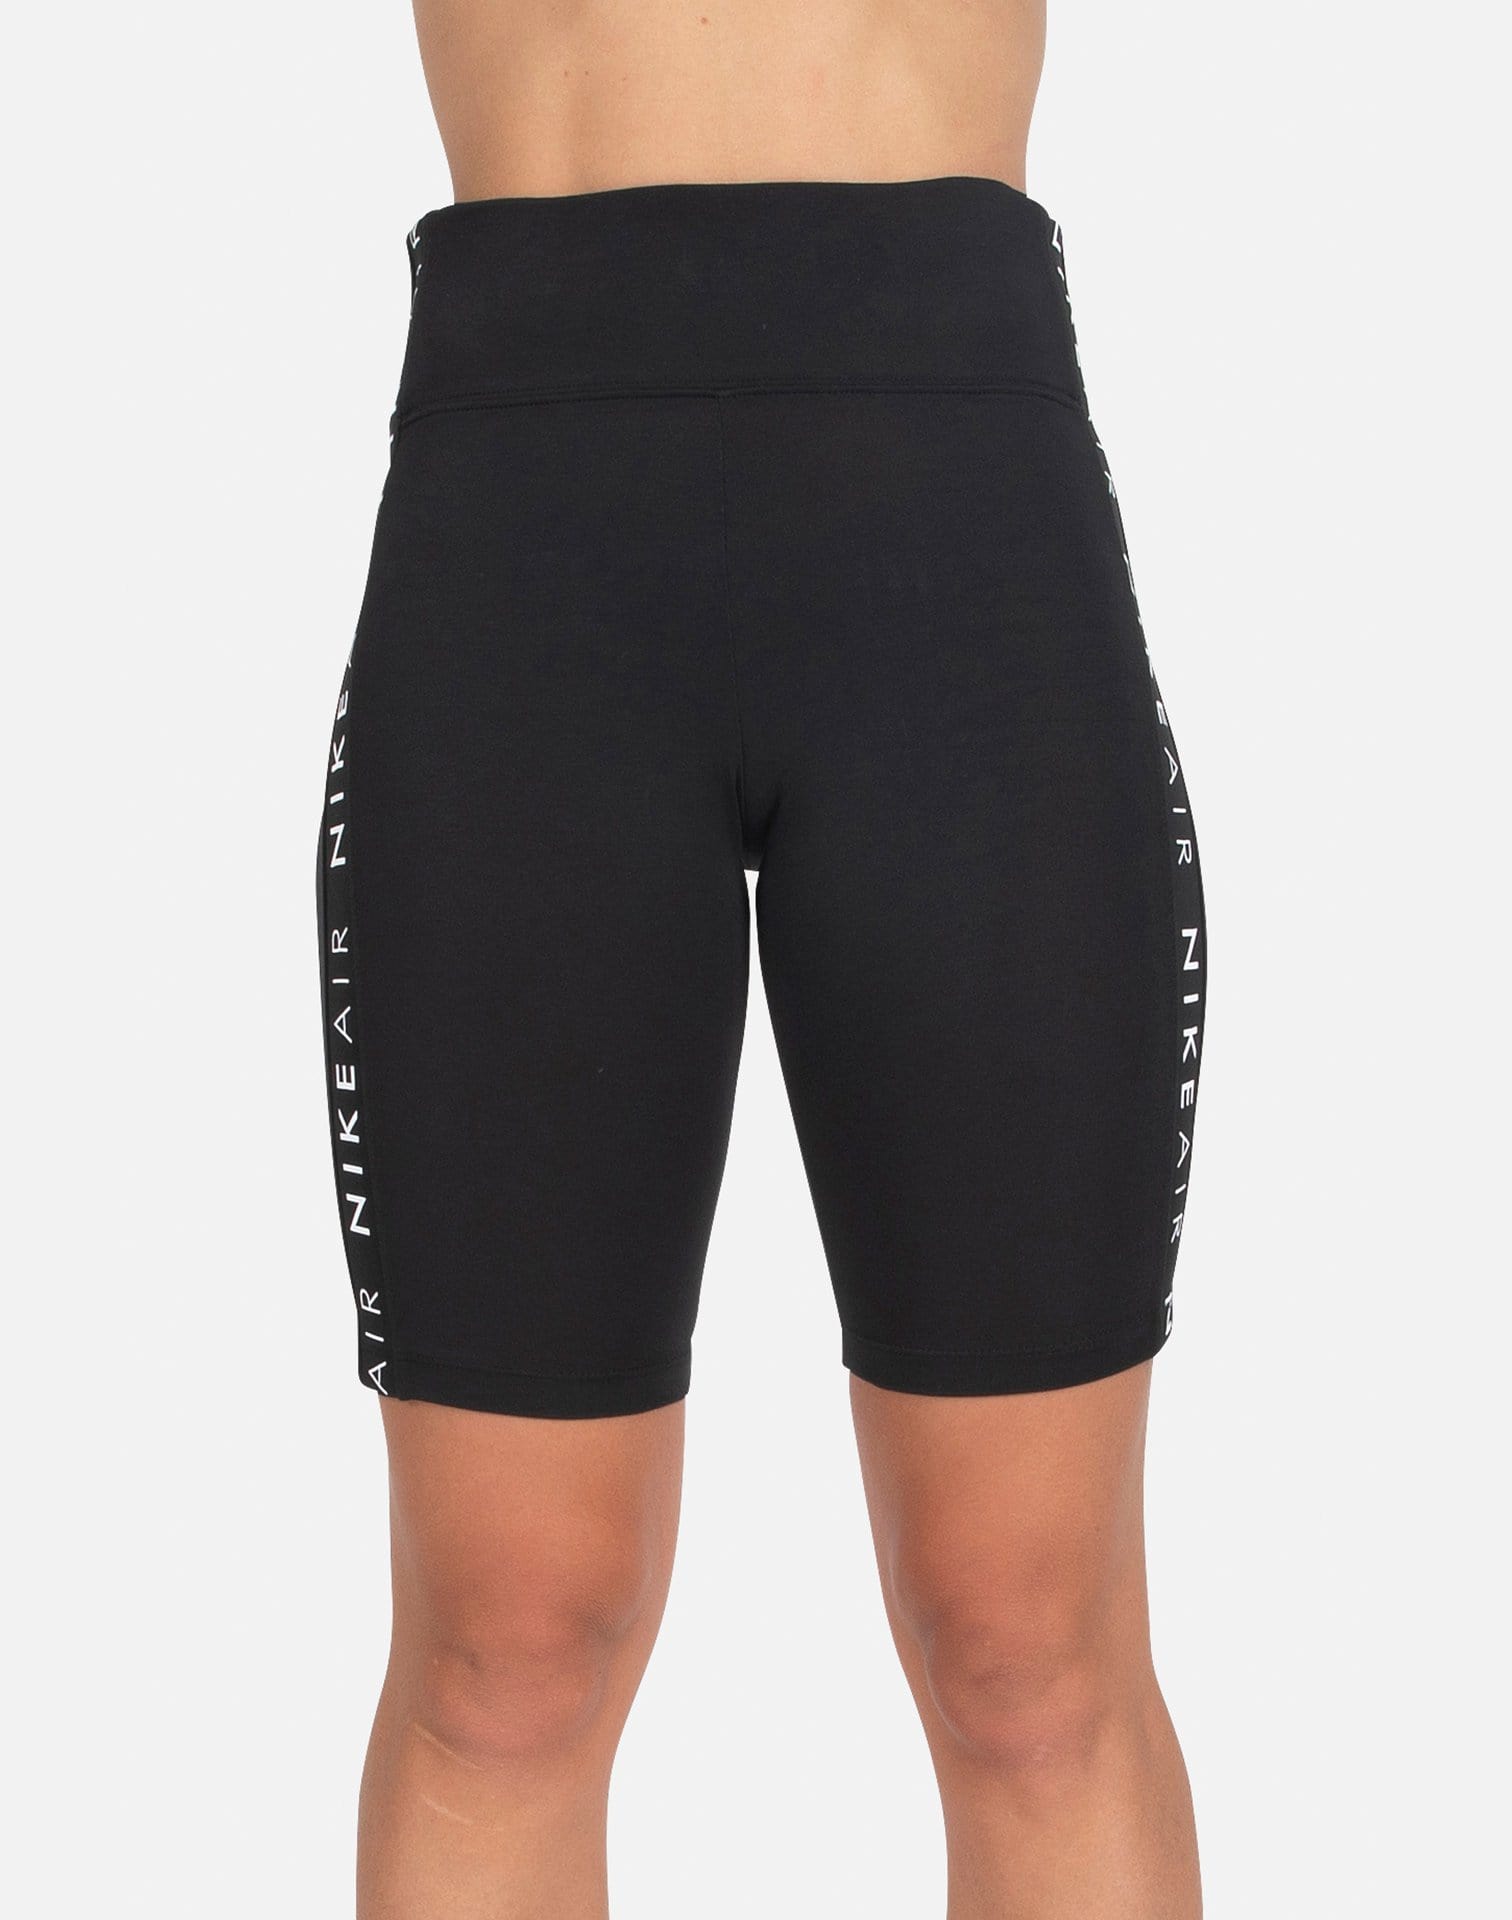 black nike biker shorts women's